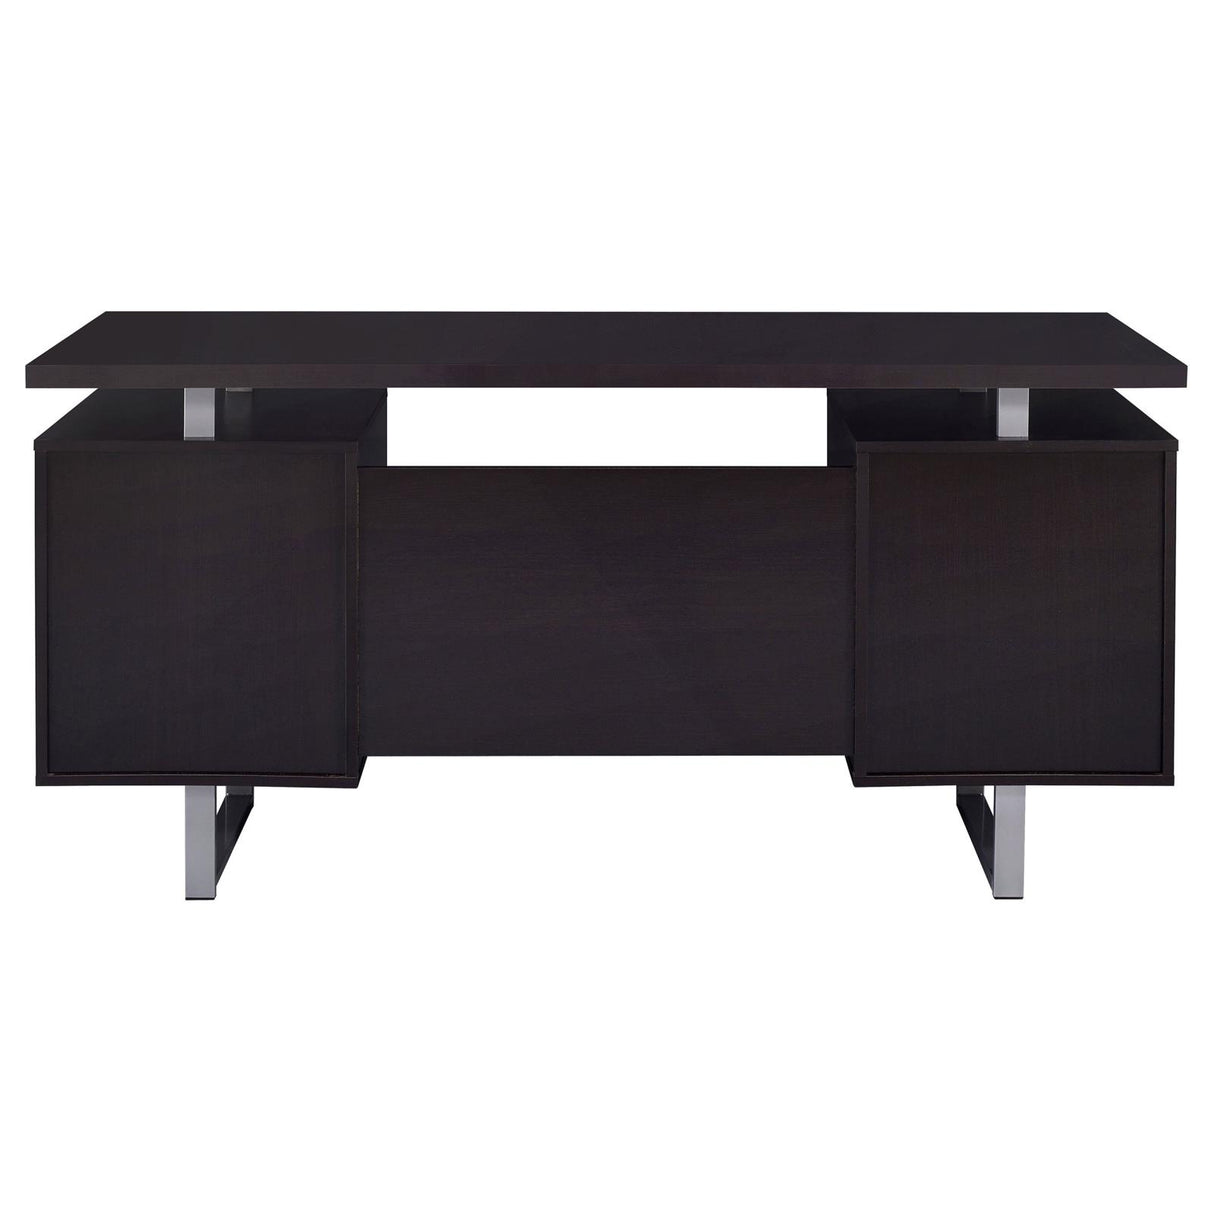 Lawtey Rectangular Storage Office Desk Cappuccino - 801521 - Luna Furniture